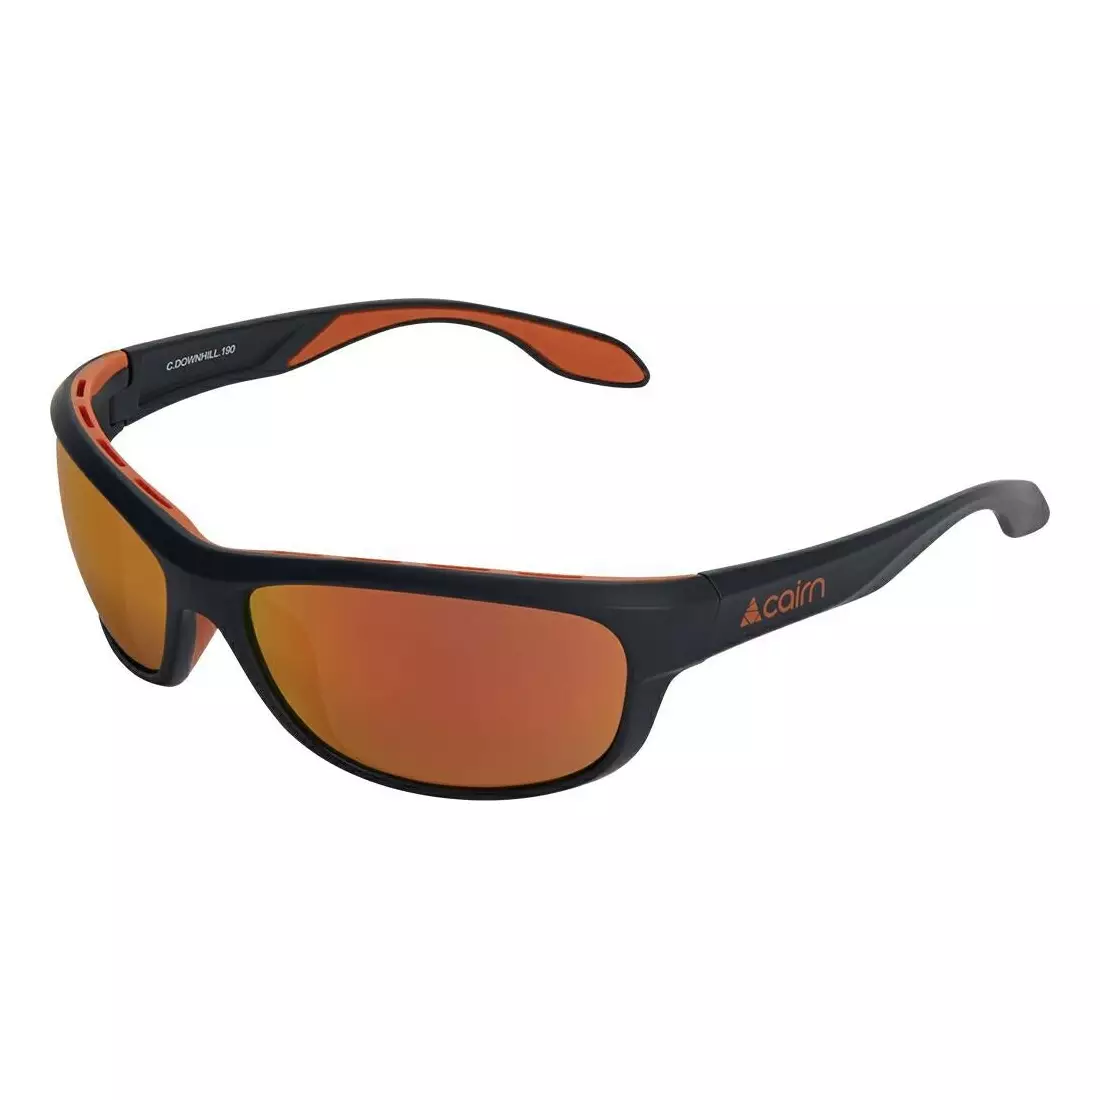 CAIRN sportszemüveg DOWNHILL 190, black-orange CDOWNHILL190